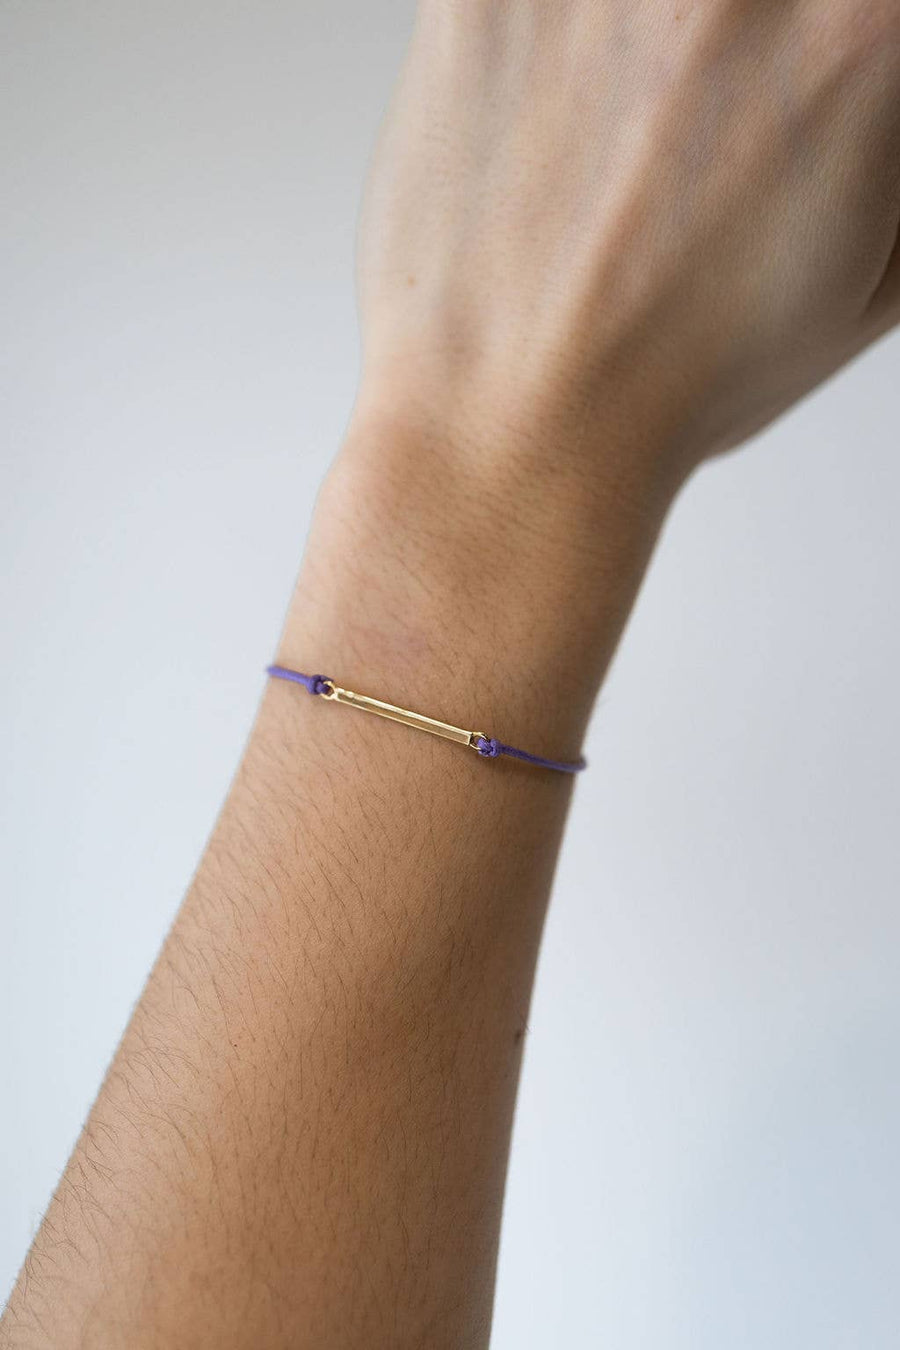 Gold Bar Sailor Bracelet - Choose your color: Lilac